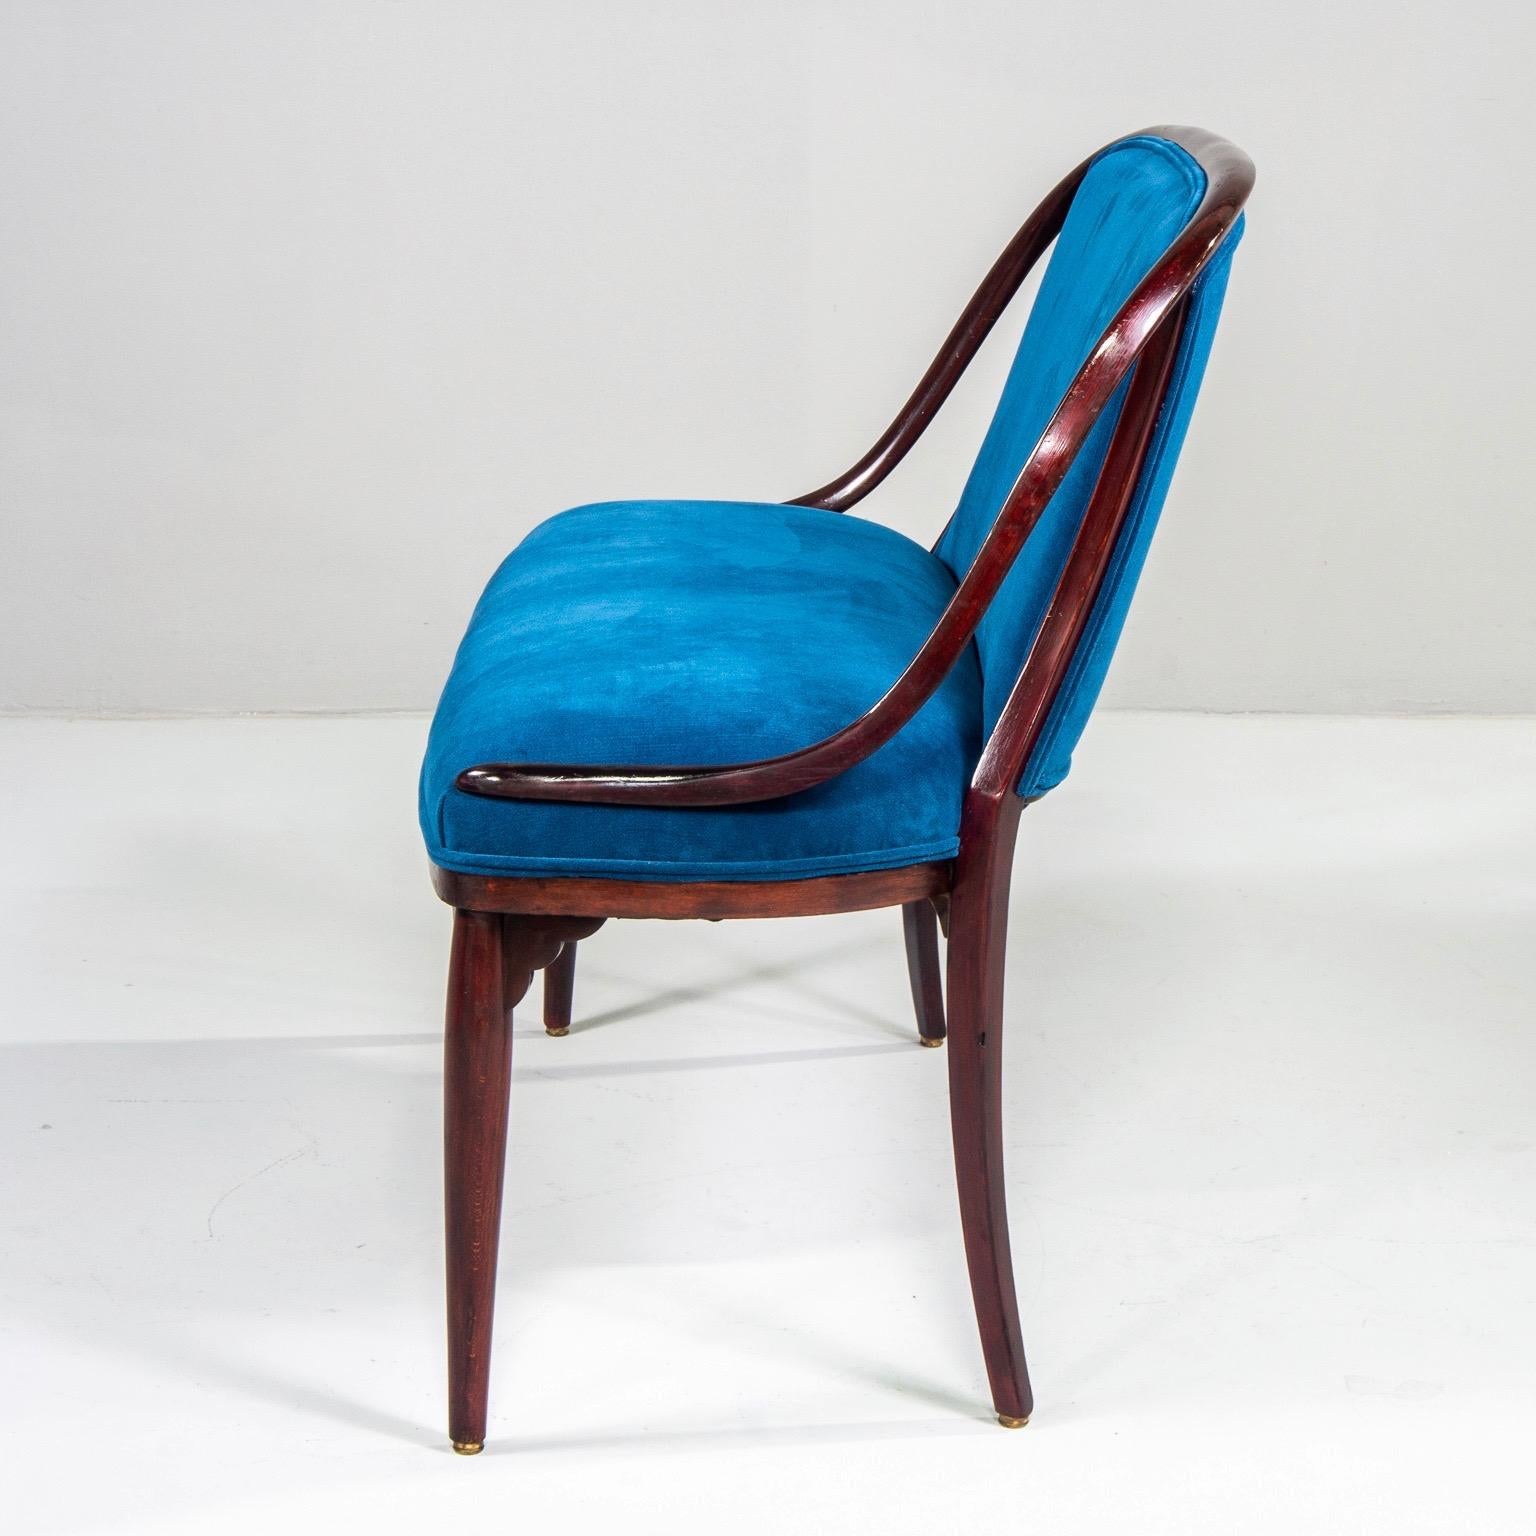 20th Century Thonet Settee with New Teal Blue Velvet Upholstery